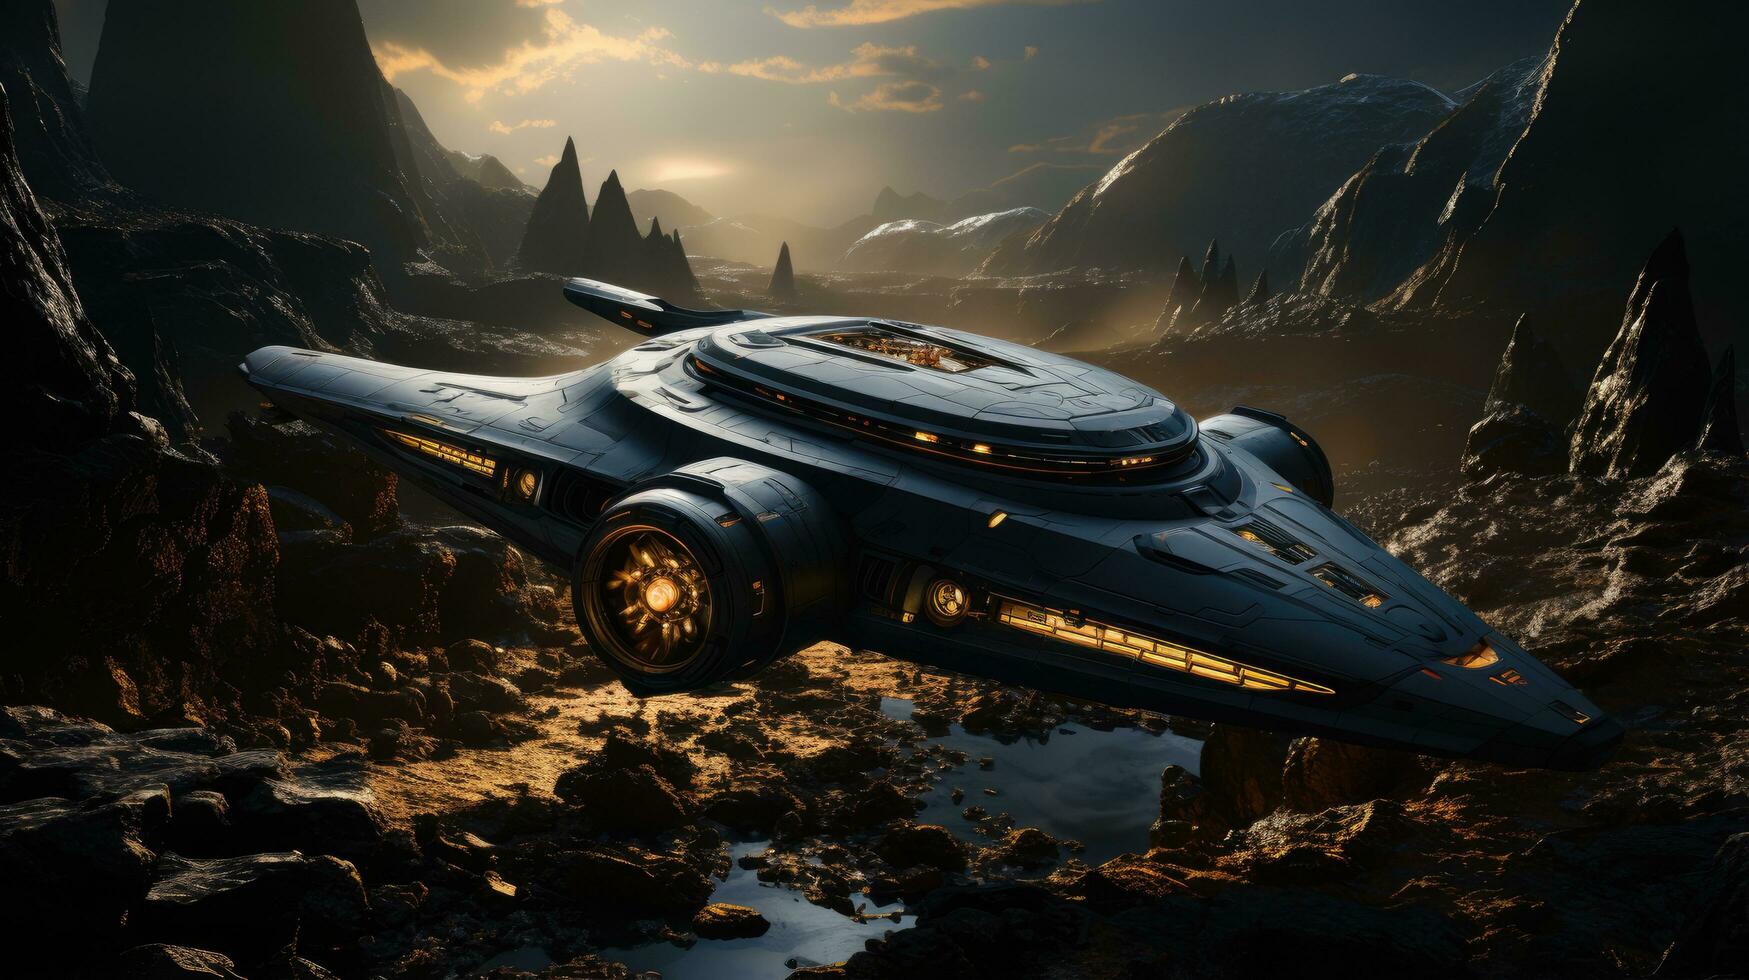 Hyper-realistic depiction of a futuristic starship. Generative AI photo